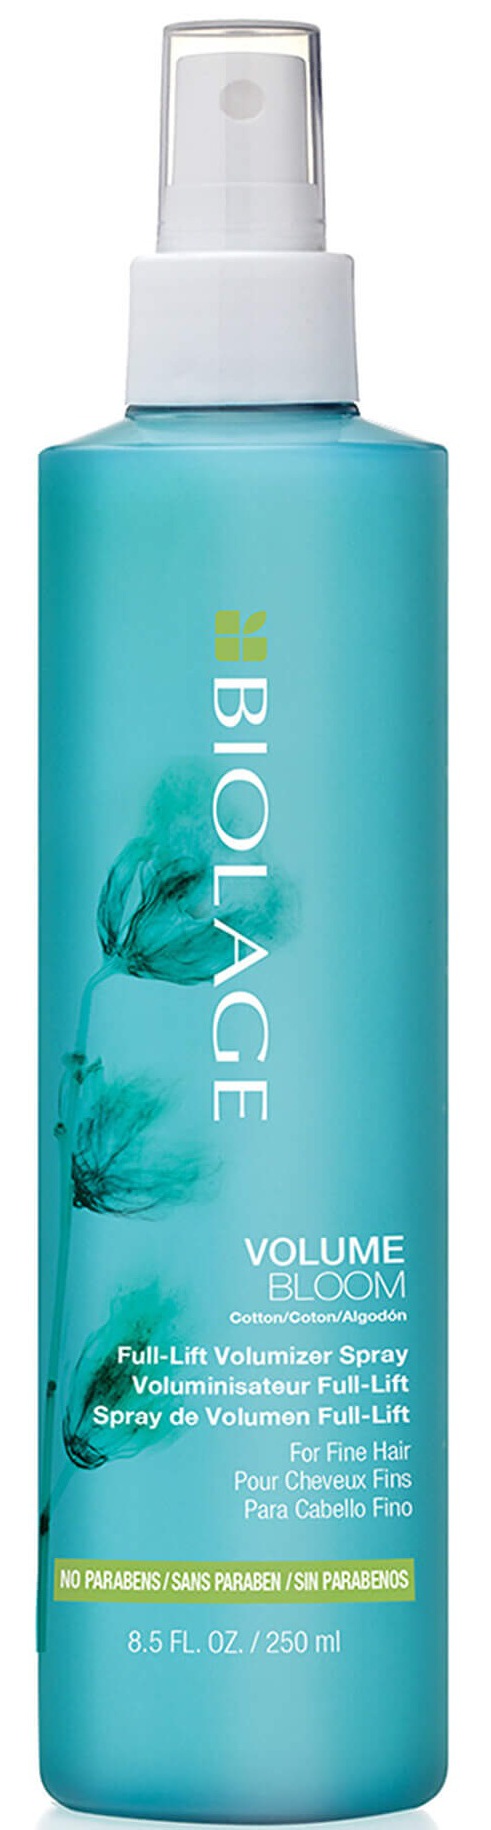 Biolage Volume Bloom Full-Lift Volumizer Spray